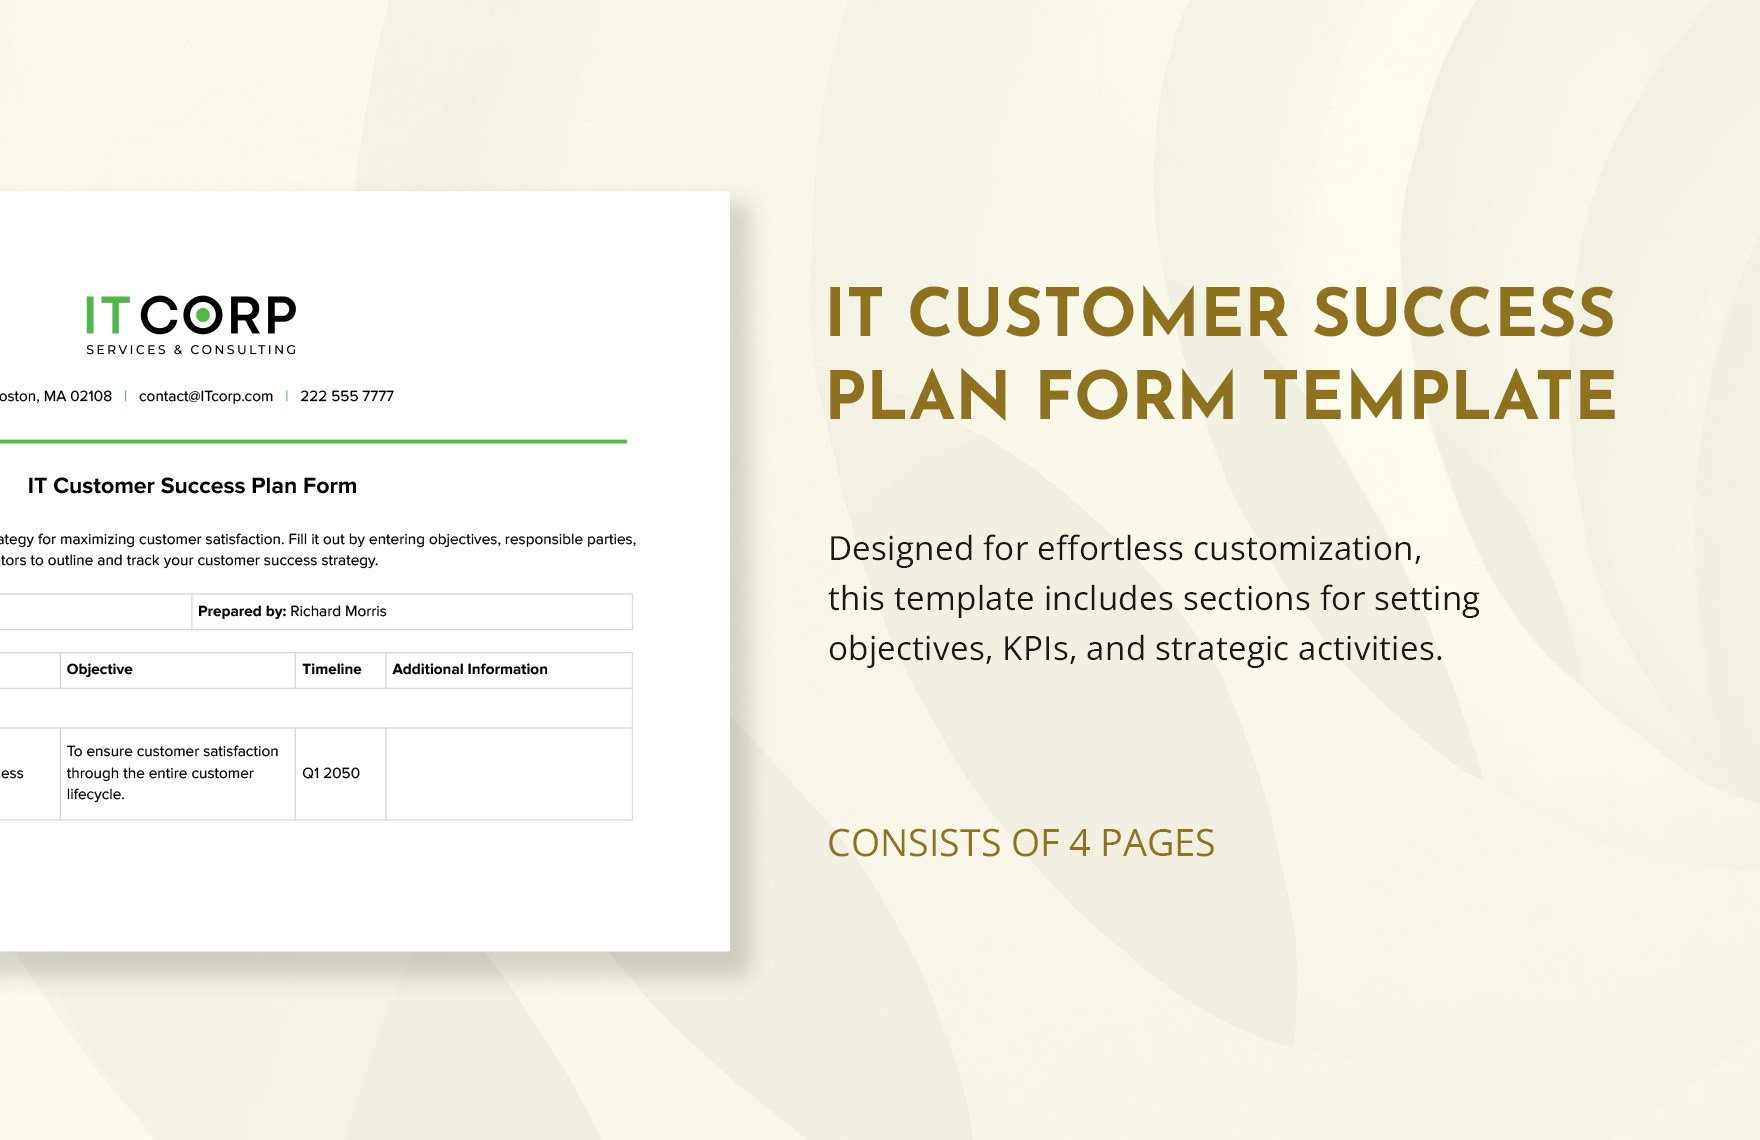 IT Customer Success Plan Form Template